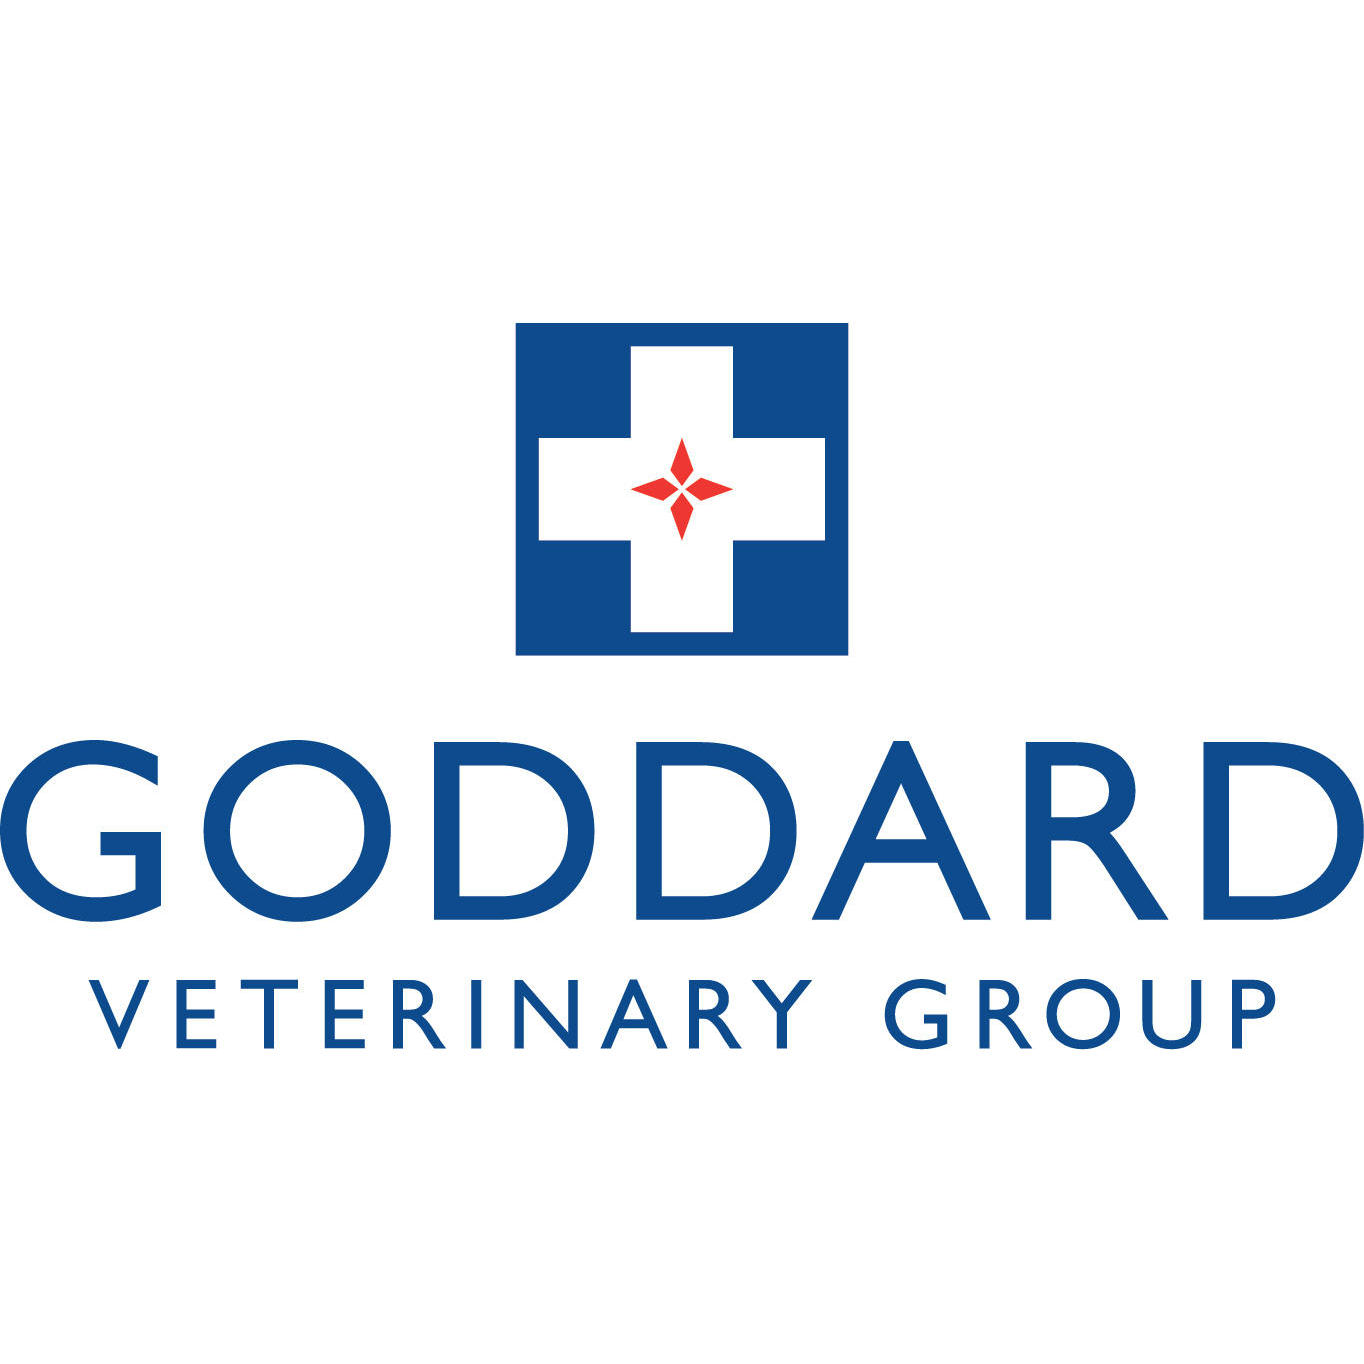 Goddard Veterinary Group, Chingford - London, London E4 9BS - 020 8529 0111 | ShowMeLocal.com